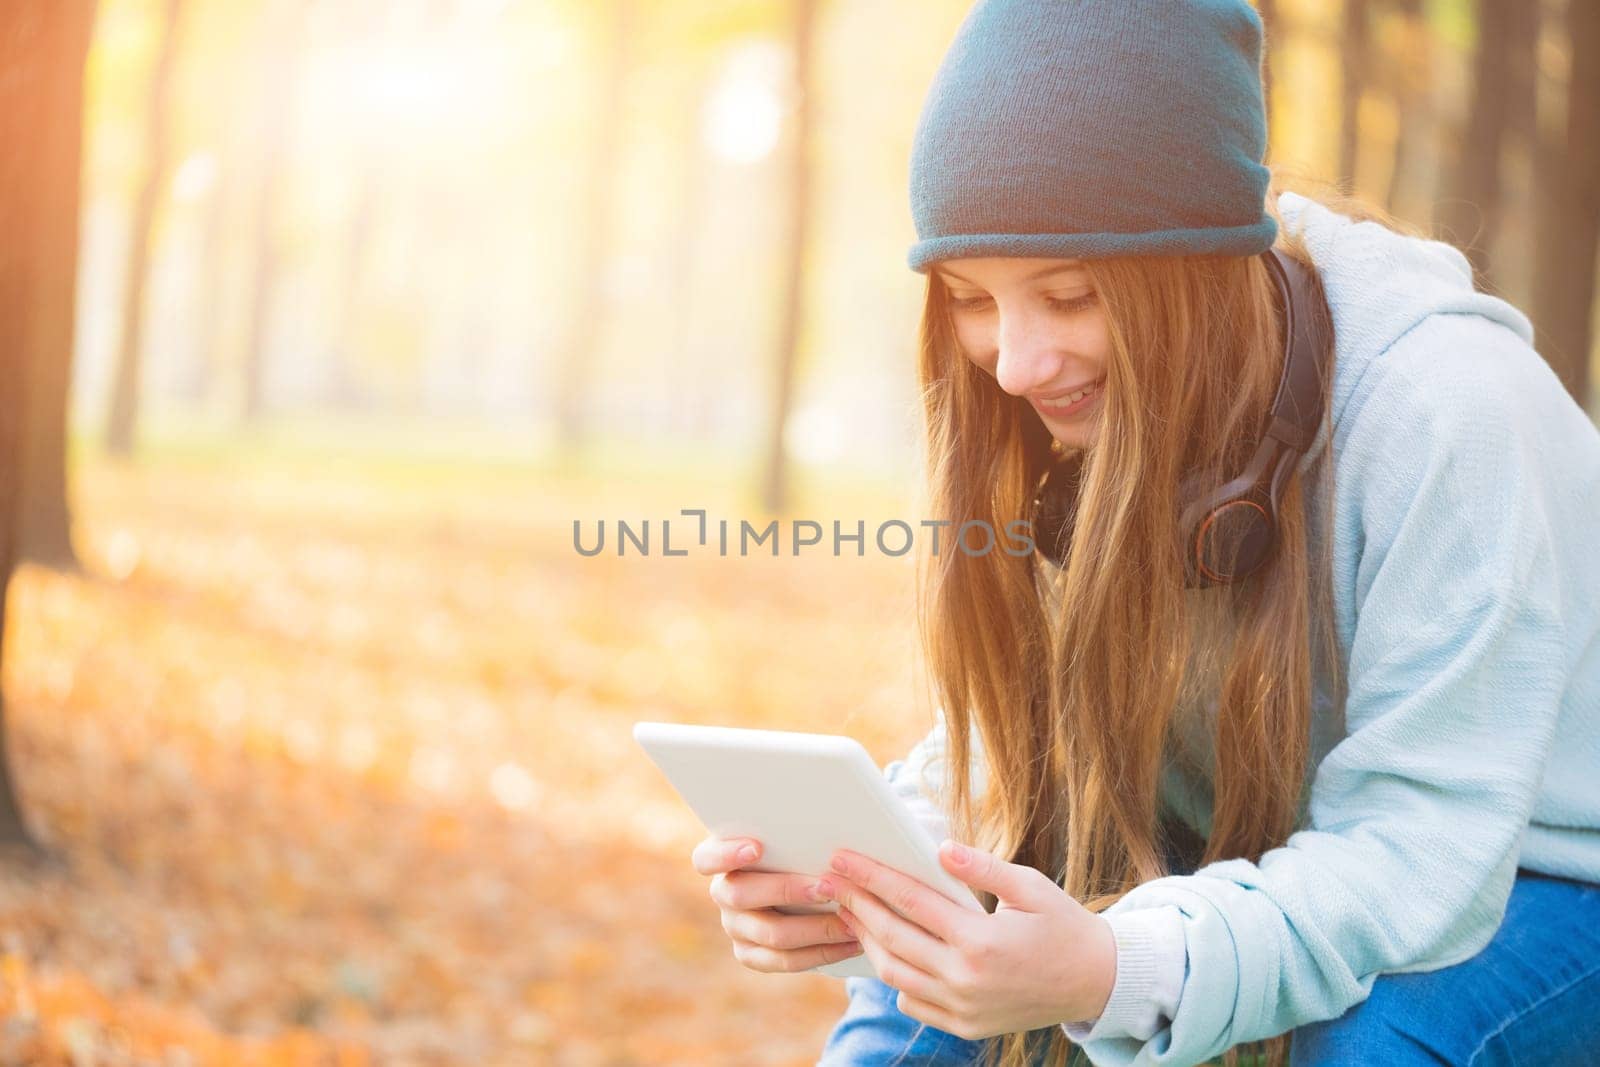 Smiling girl reading on tablet by GekaSkr